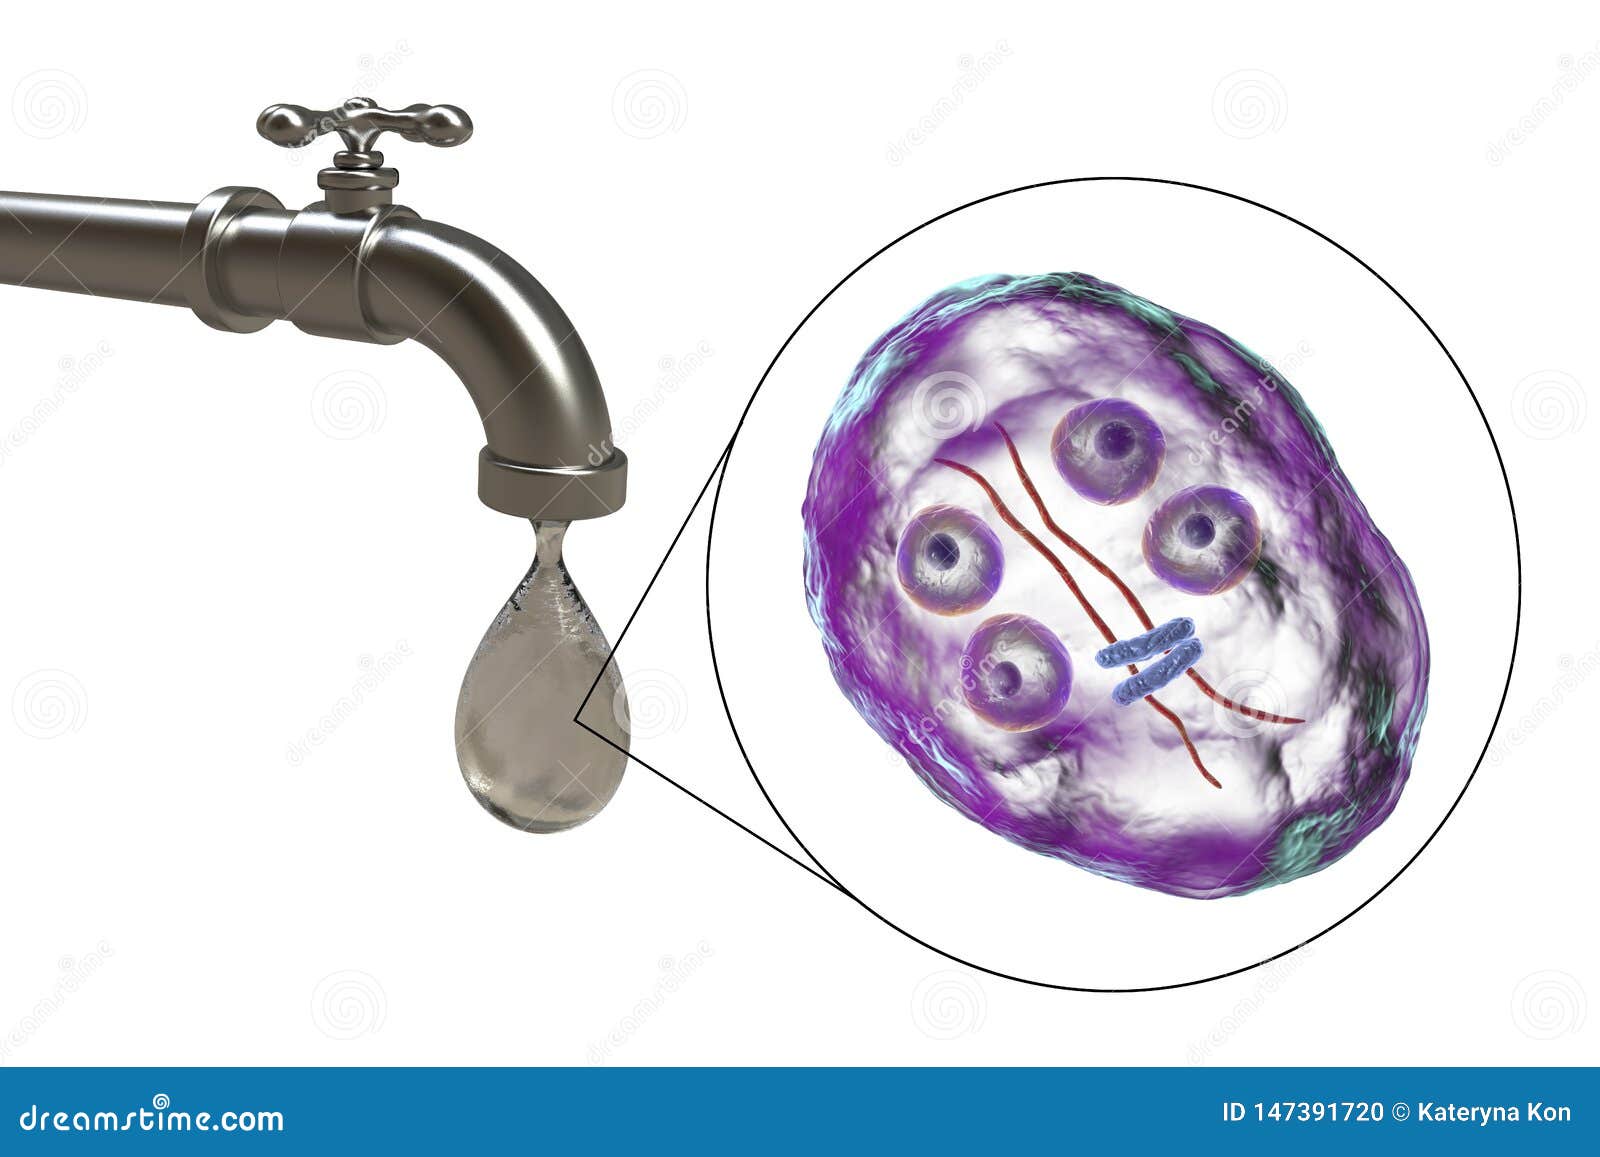 Giardia cysts in stool treatment. Giardia cysts in water, Навигация по записям